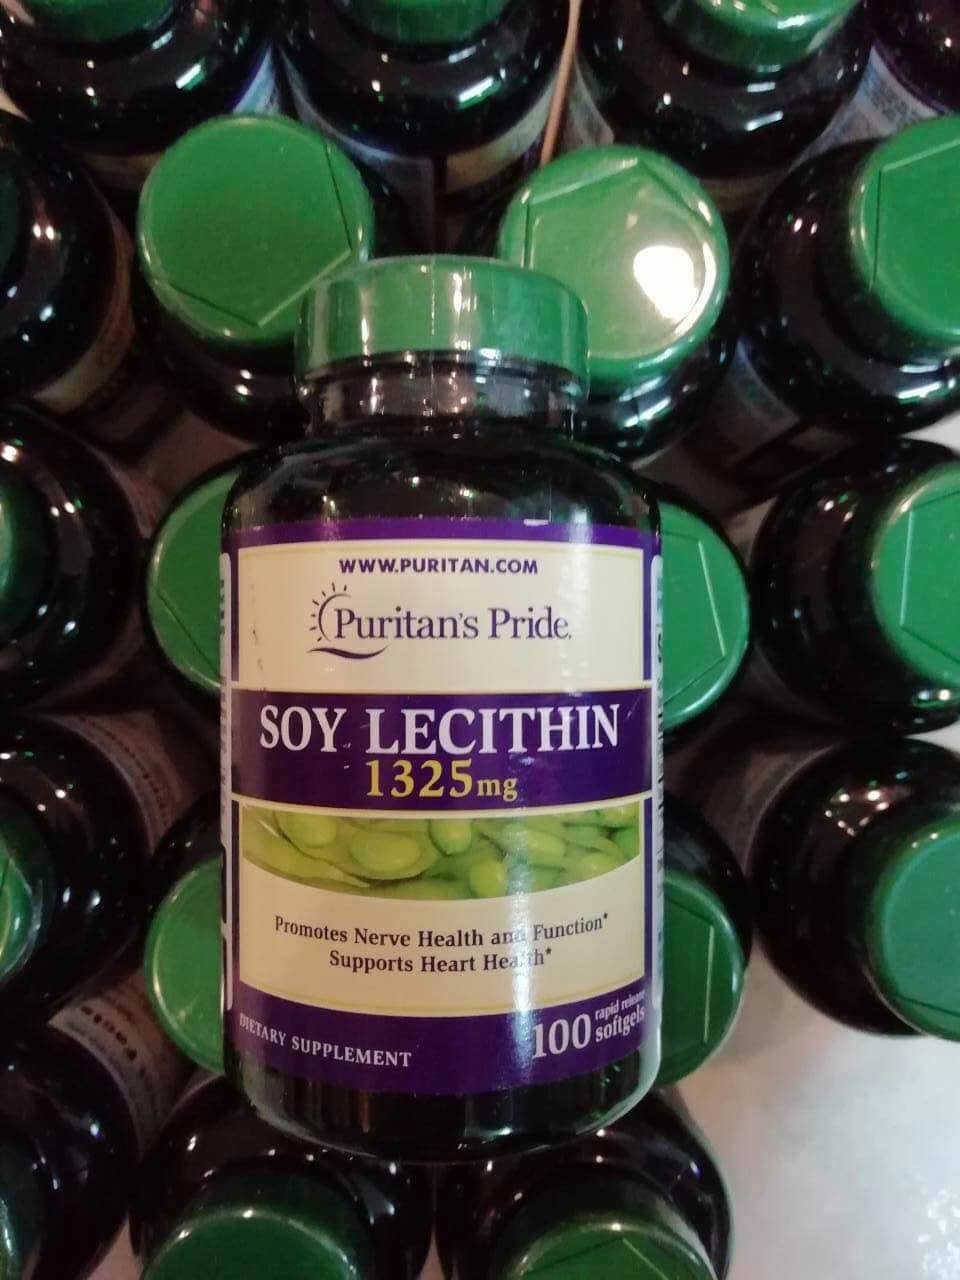 soy lecithin, soy lecithin 1325 mg, mầm đậu nành mỹ, mầm đậu nành của mỹ, mầm đậu nành soy của mỹ, tinh chất mầm đậu nành soy lecithin 1325mg, tinh chất mầm đậu nành, tinh chất mầm đậu nành puritan's pride,